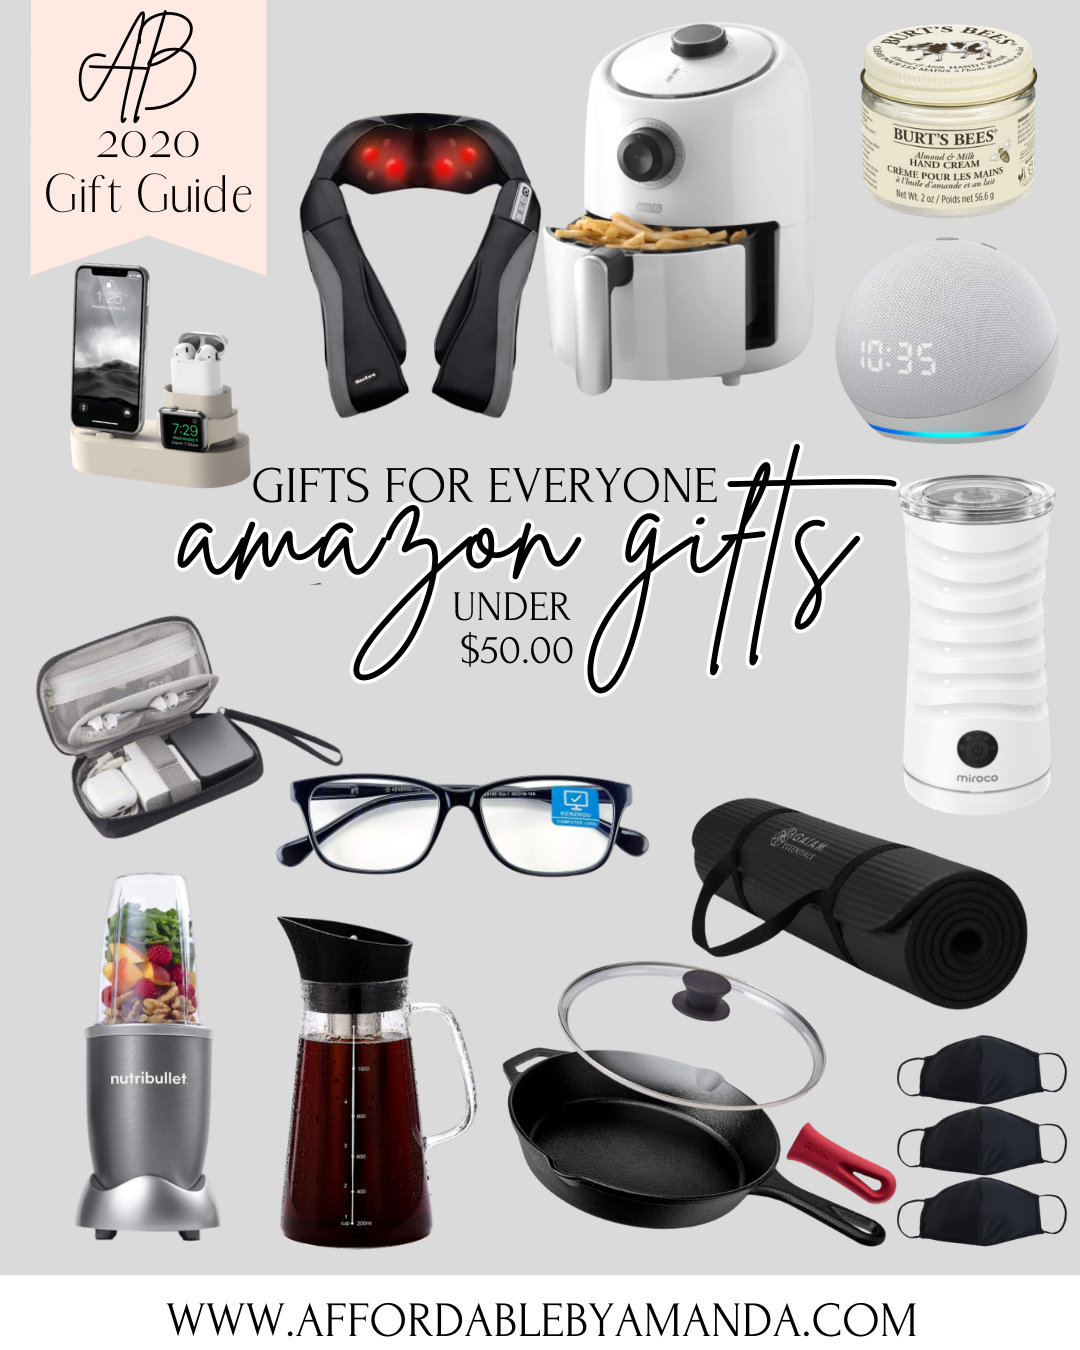 Amazon Gift Ideas Affordable by Amanda